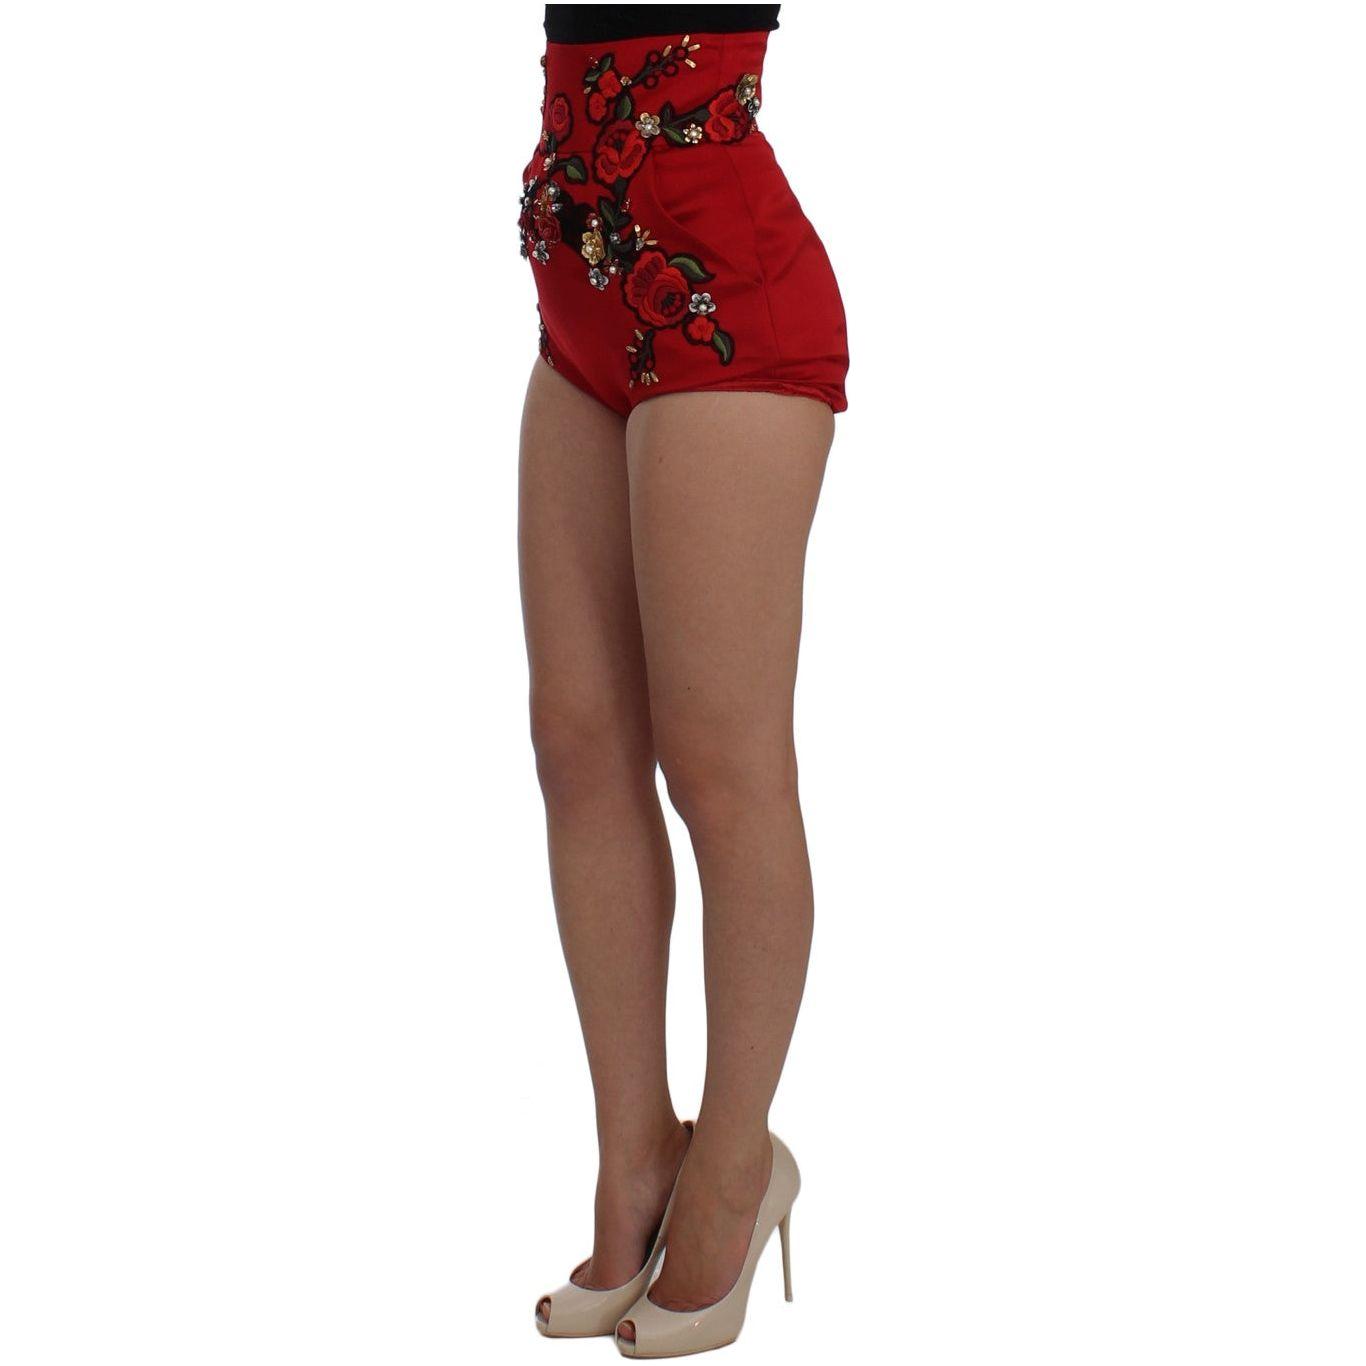 Dolce & Gabbana Enchanted Sicily Crystal-Embellished Silk Shorts red-silk-crystal-roses-shorts-6